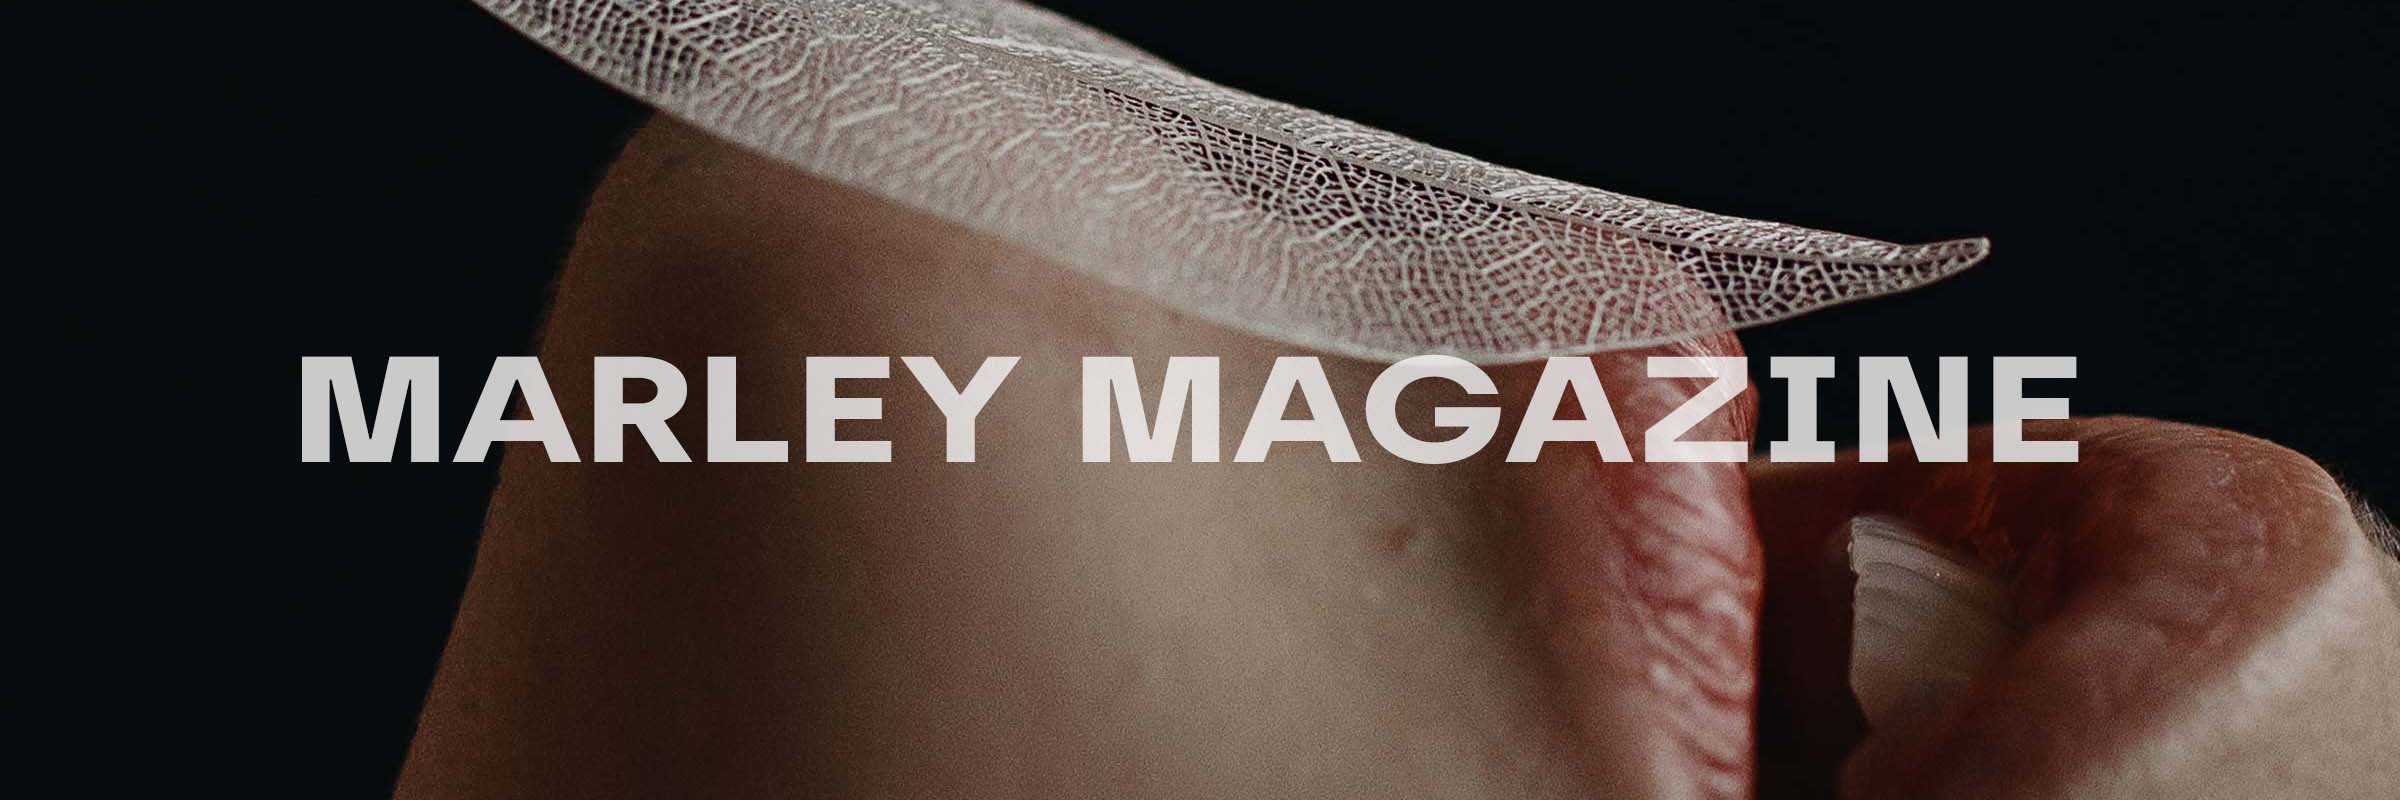 MARLEY Magazine - Banner 1_0000_MARLEY MAGAZINE.jpg